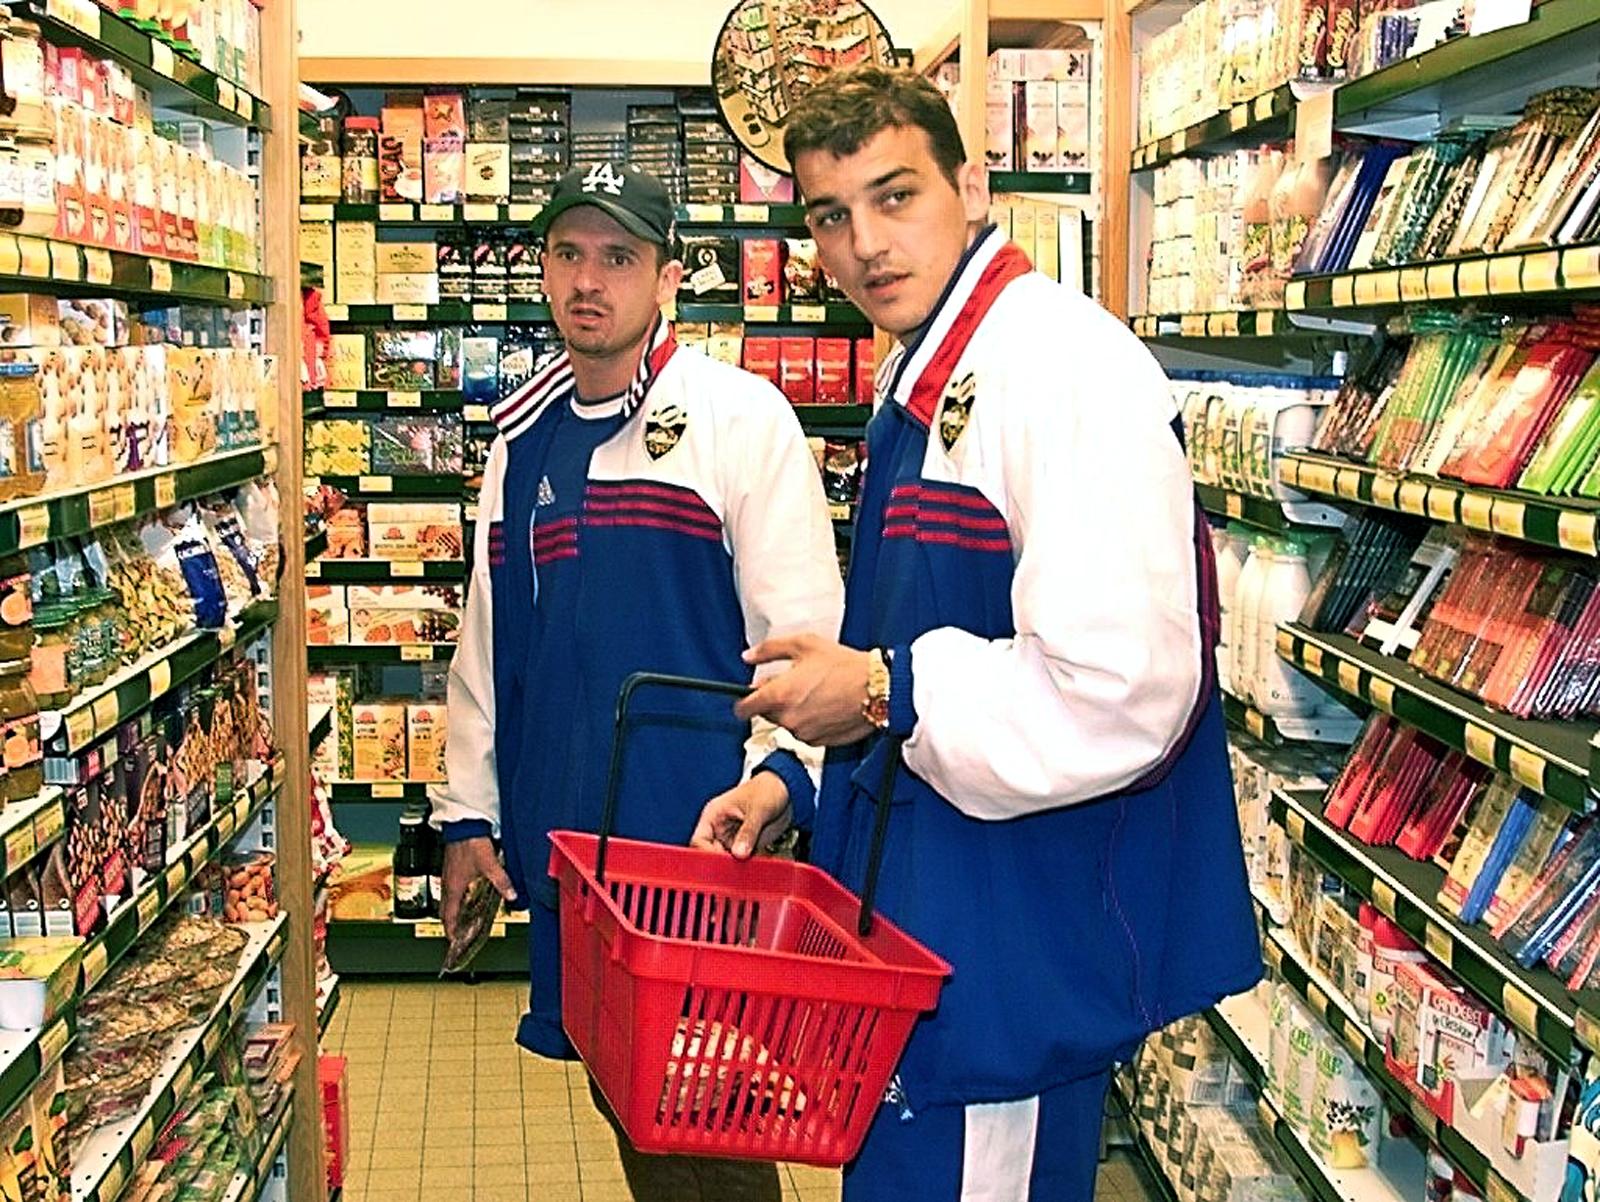 Yugoslavia team-mates Predrag Mijatovic and Milinko Pantic out shopping during France 98.